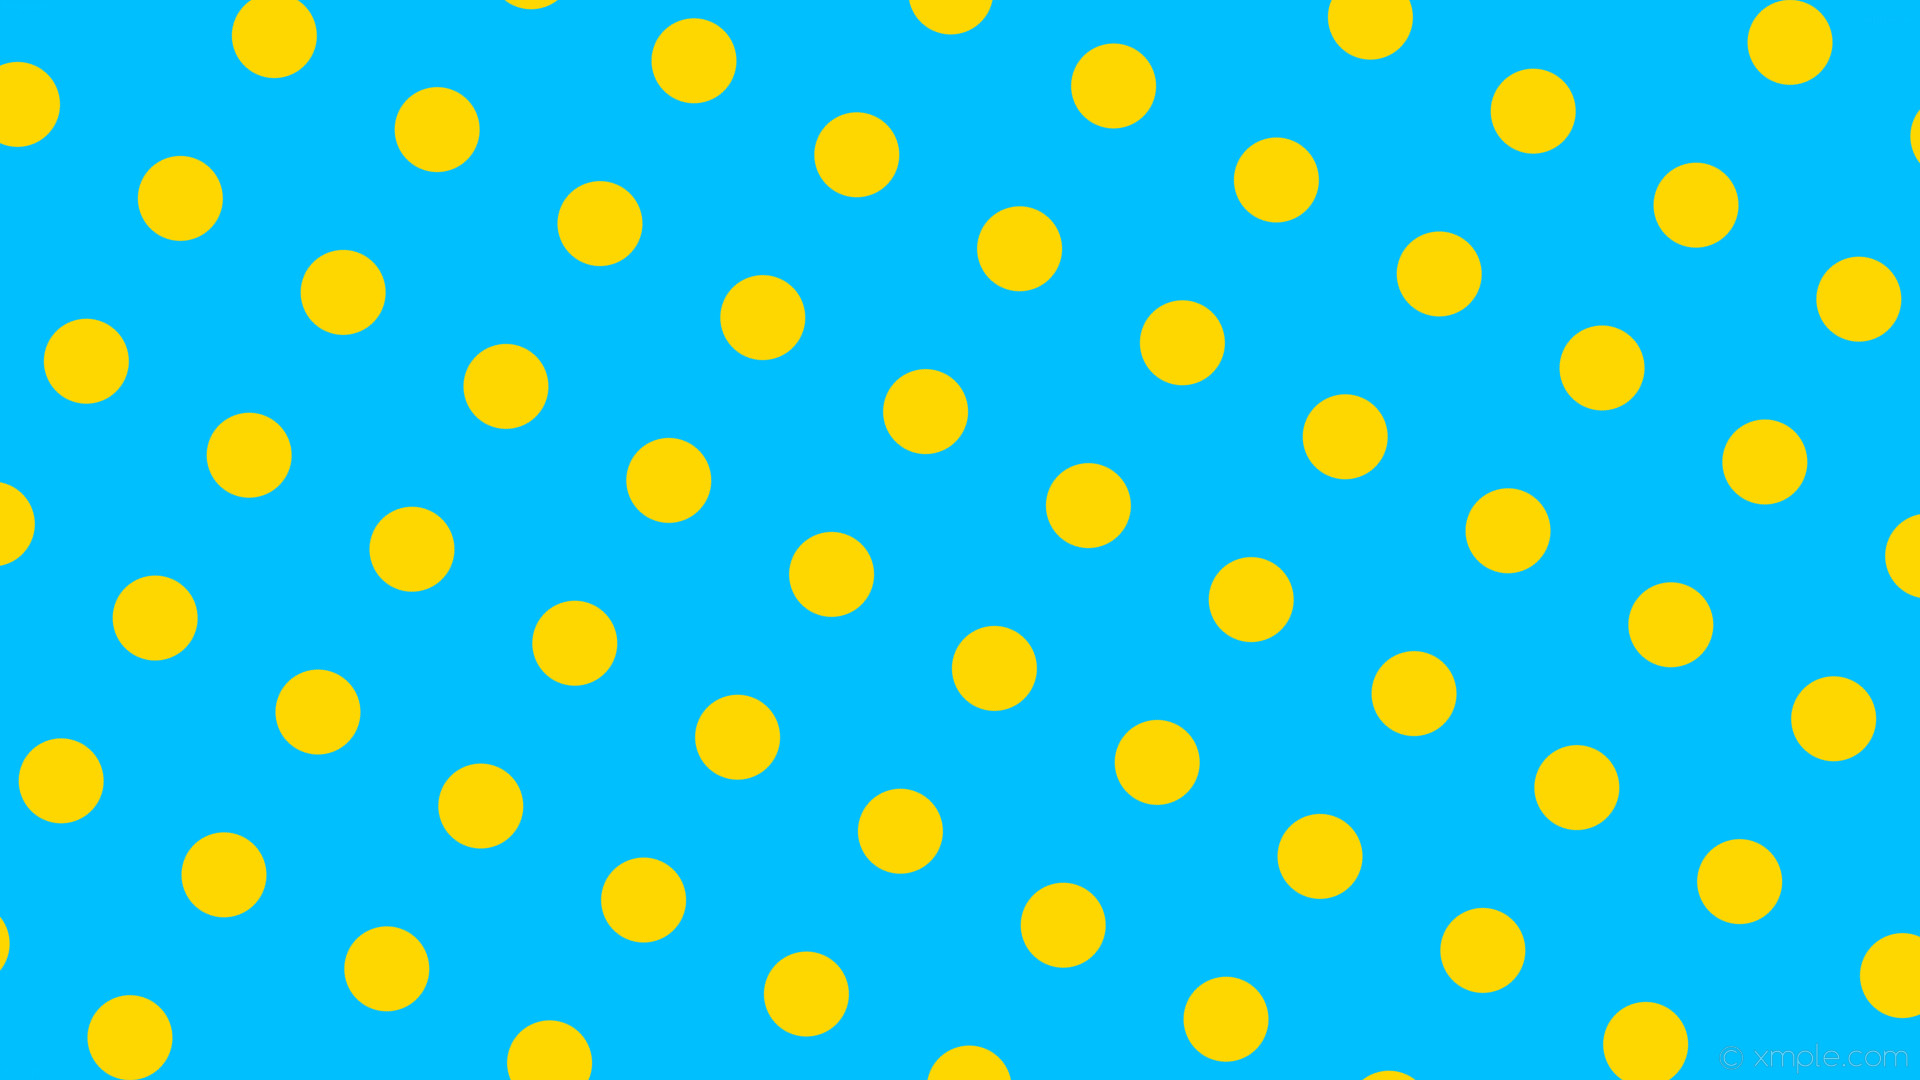 Wallpaper spots blue yellow polka dots deep sky blue gold bfff #ffd700 240